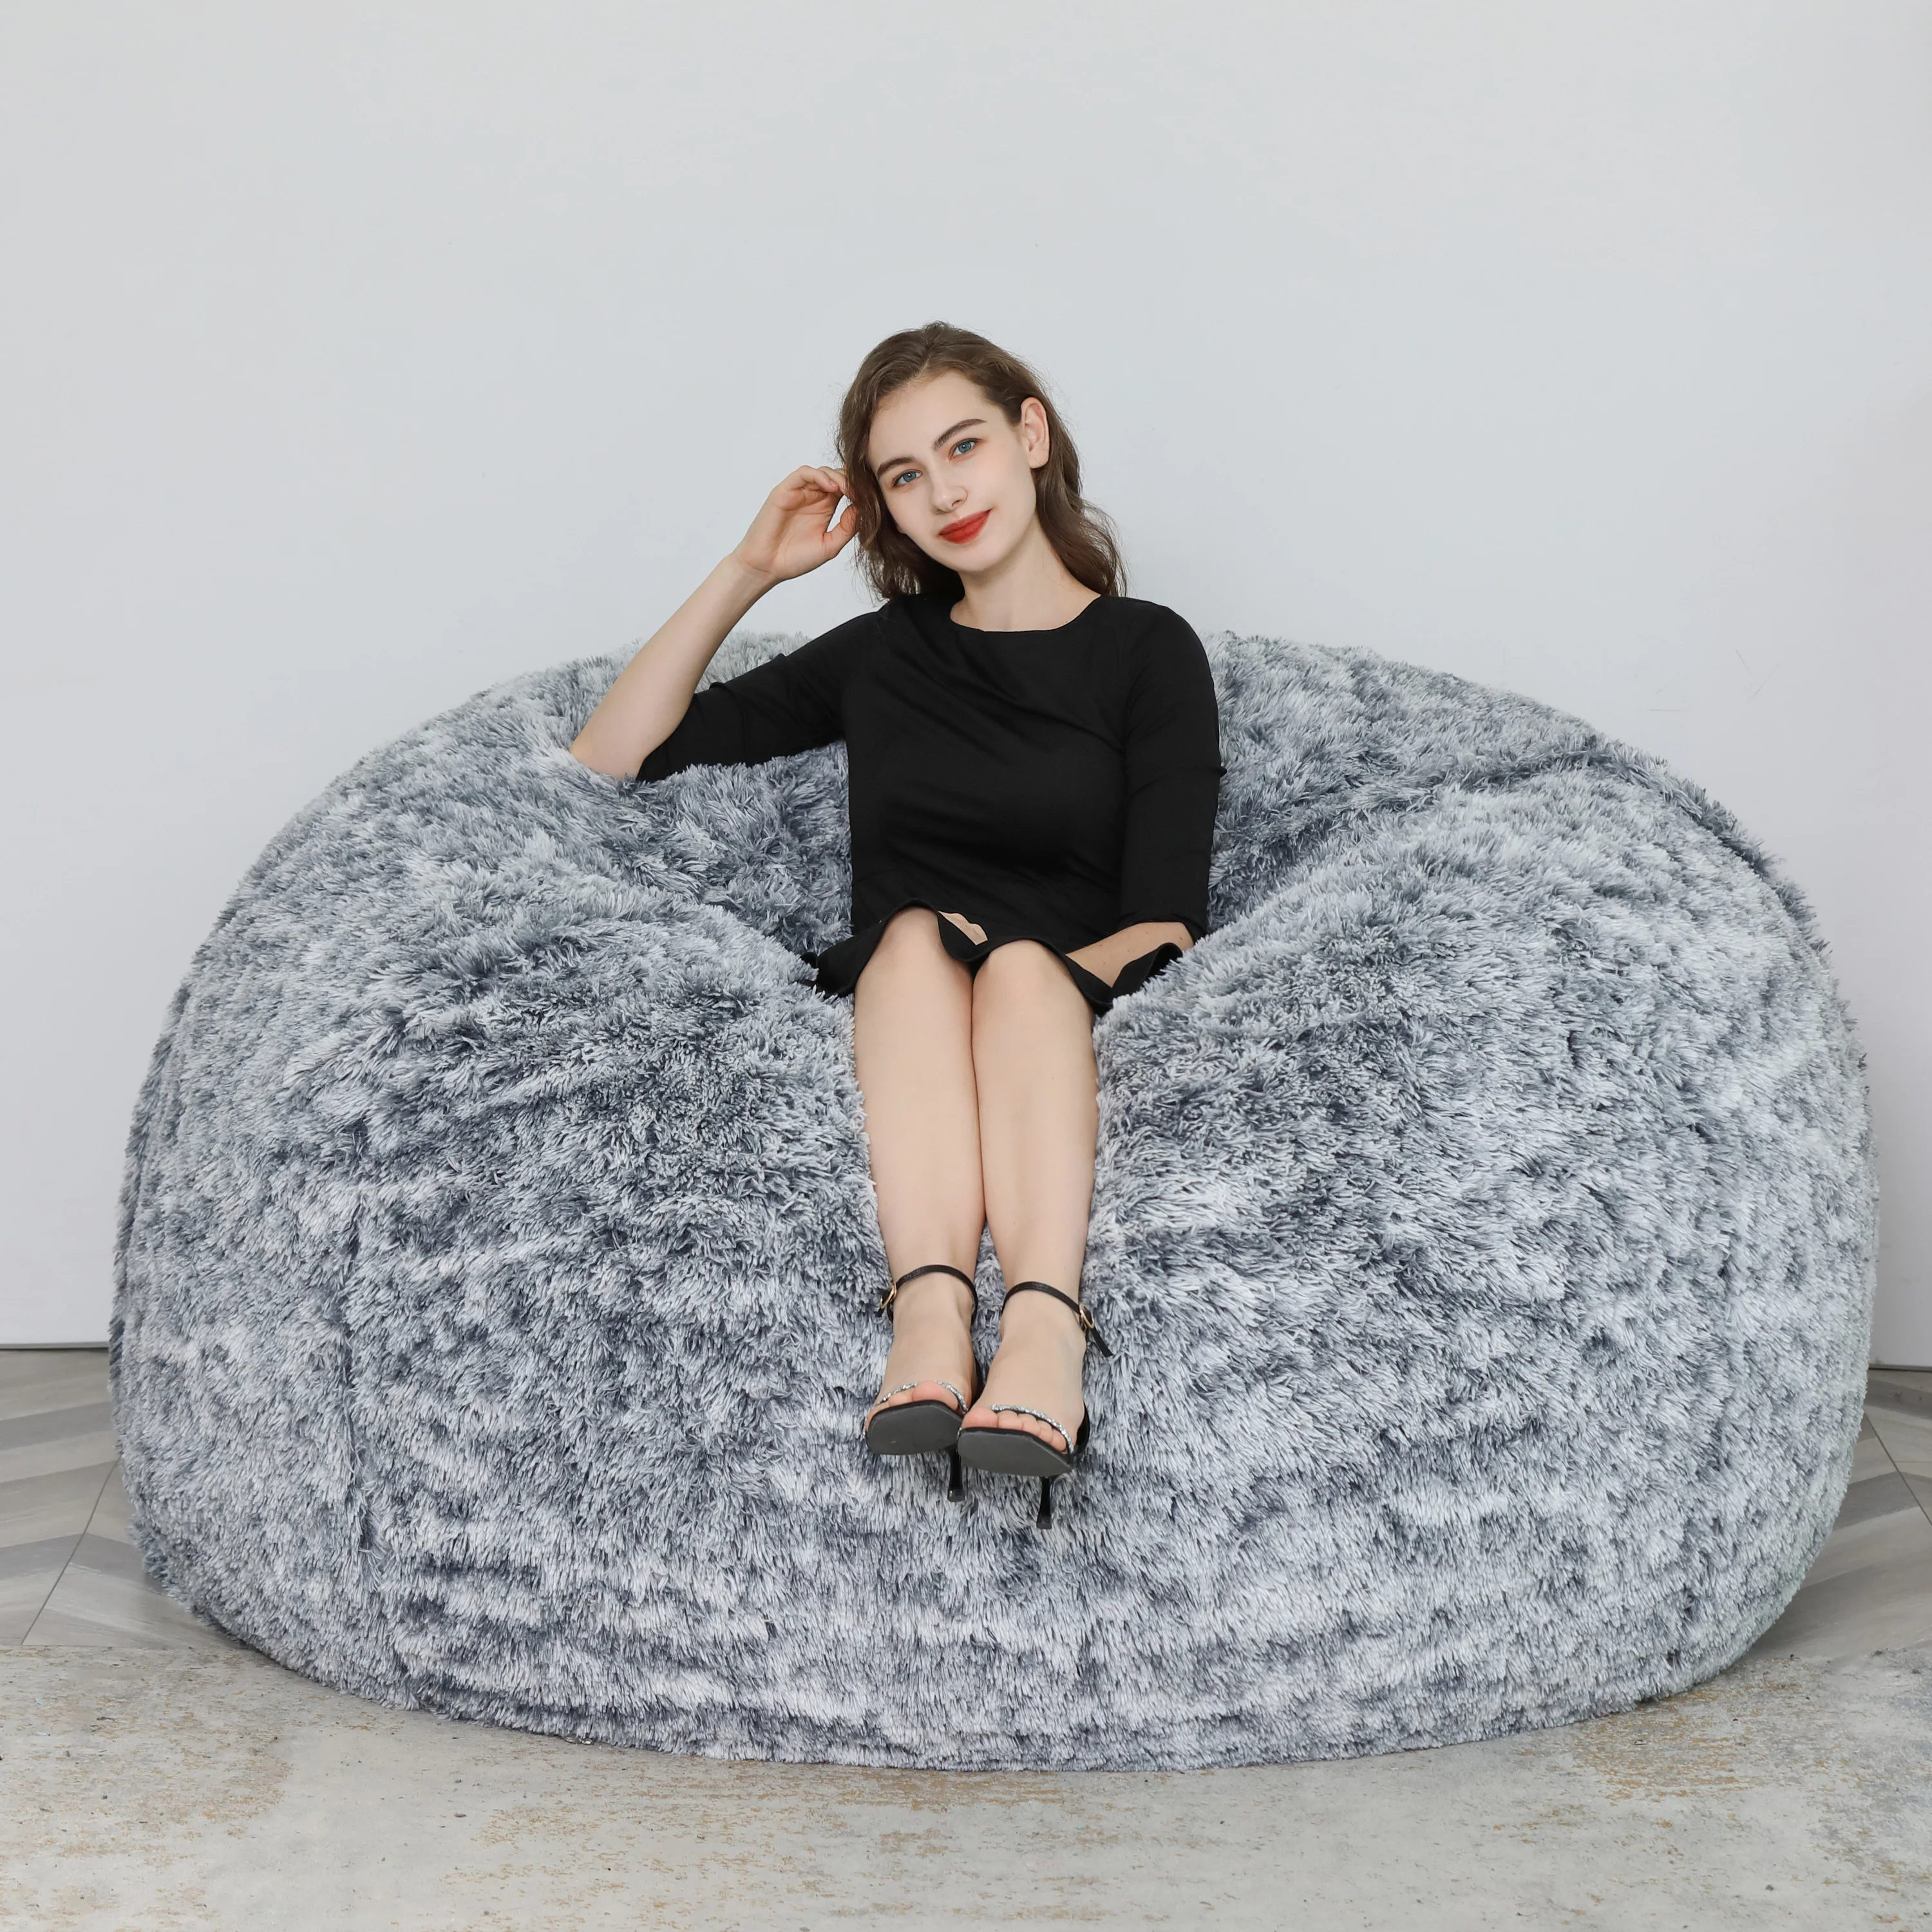 Living room sofas sponge compressed foam bean bag chairs giant beanbag home furniture lounger sofa bed